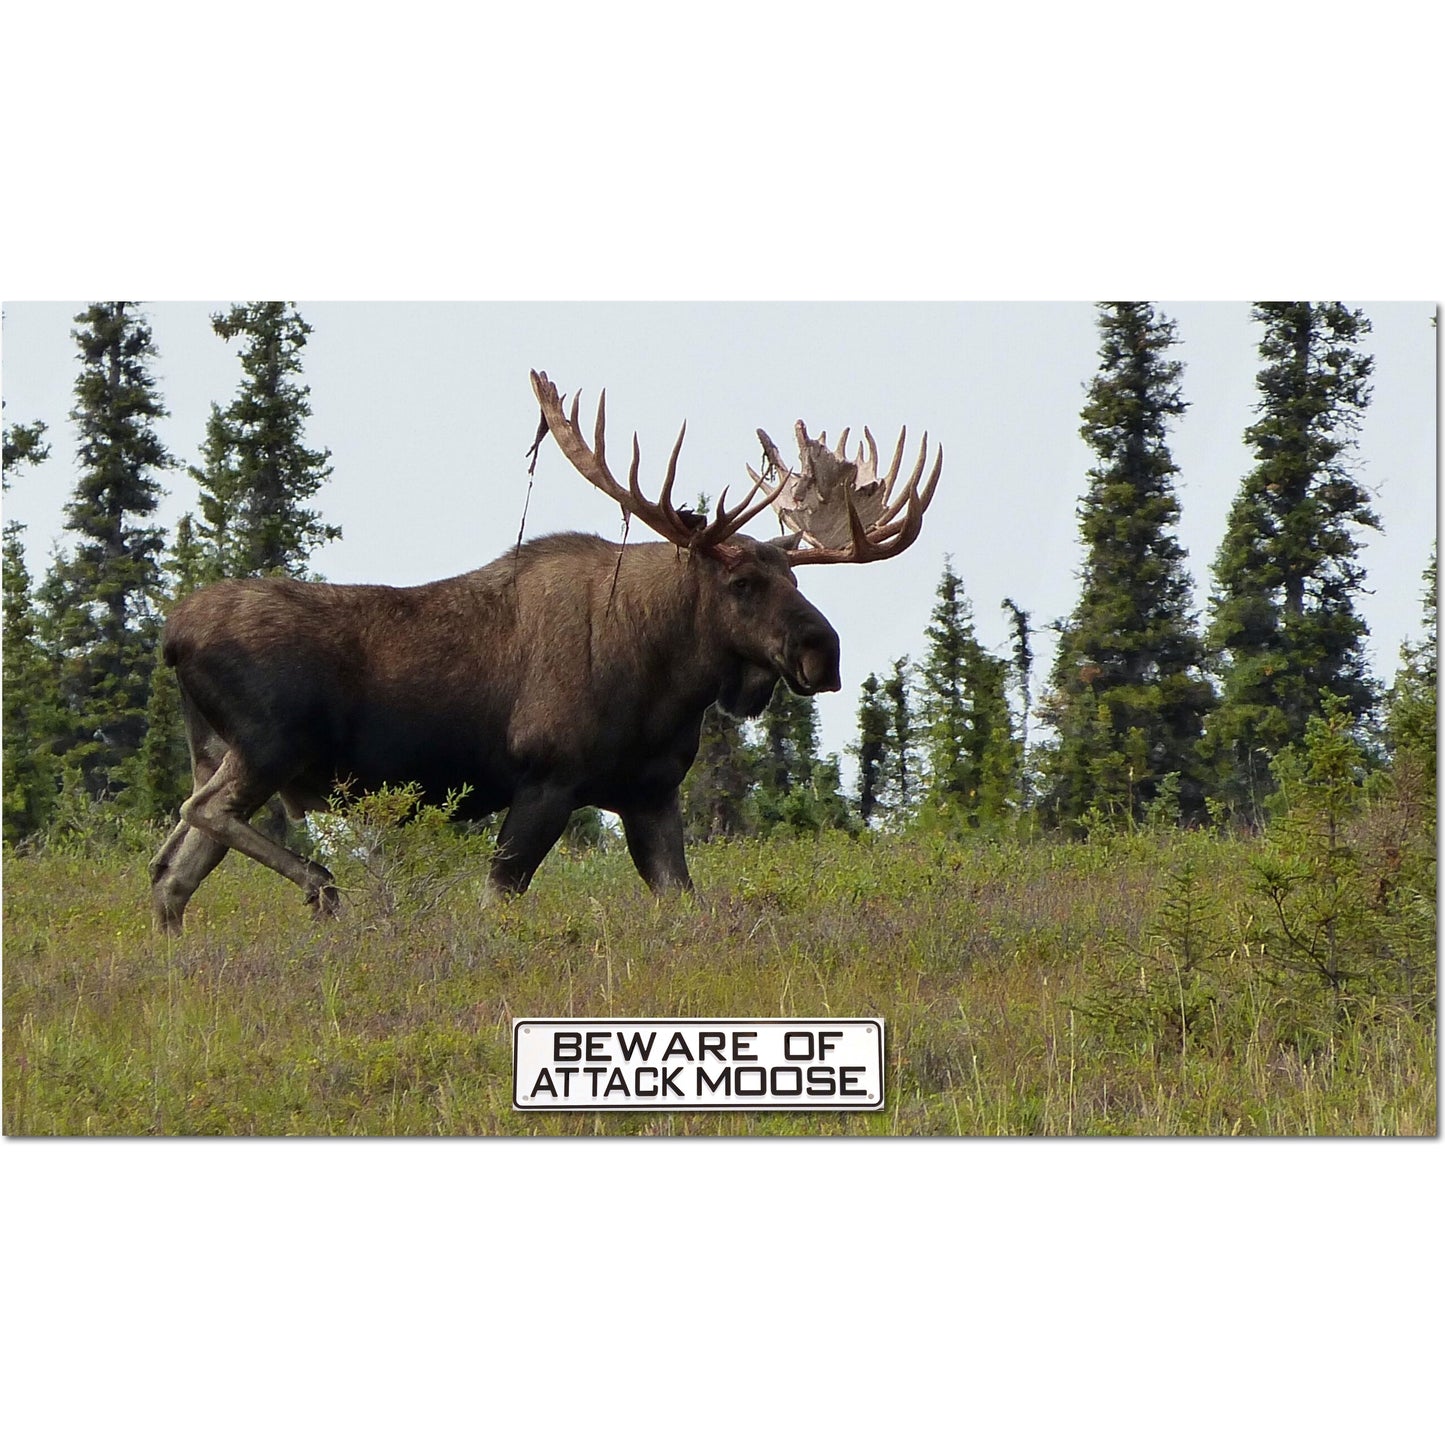 Beware of Attack Moose Sign Solid Plastic 12 X 3